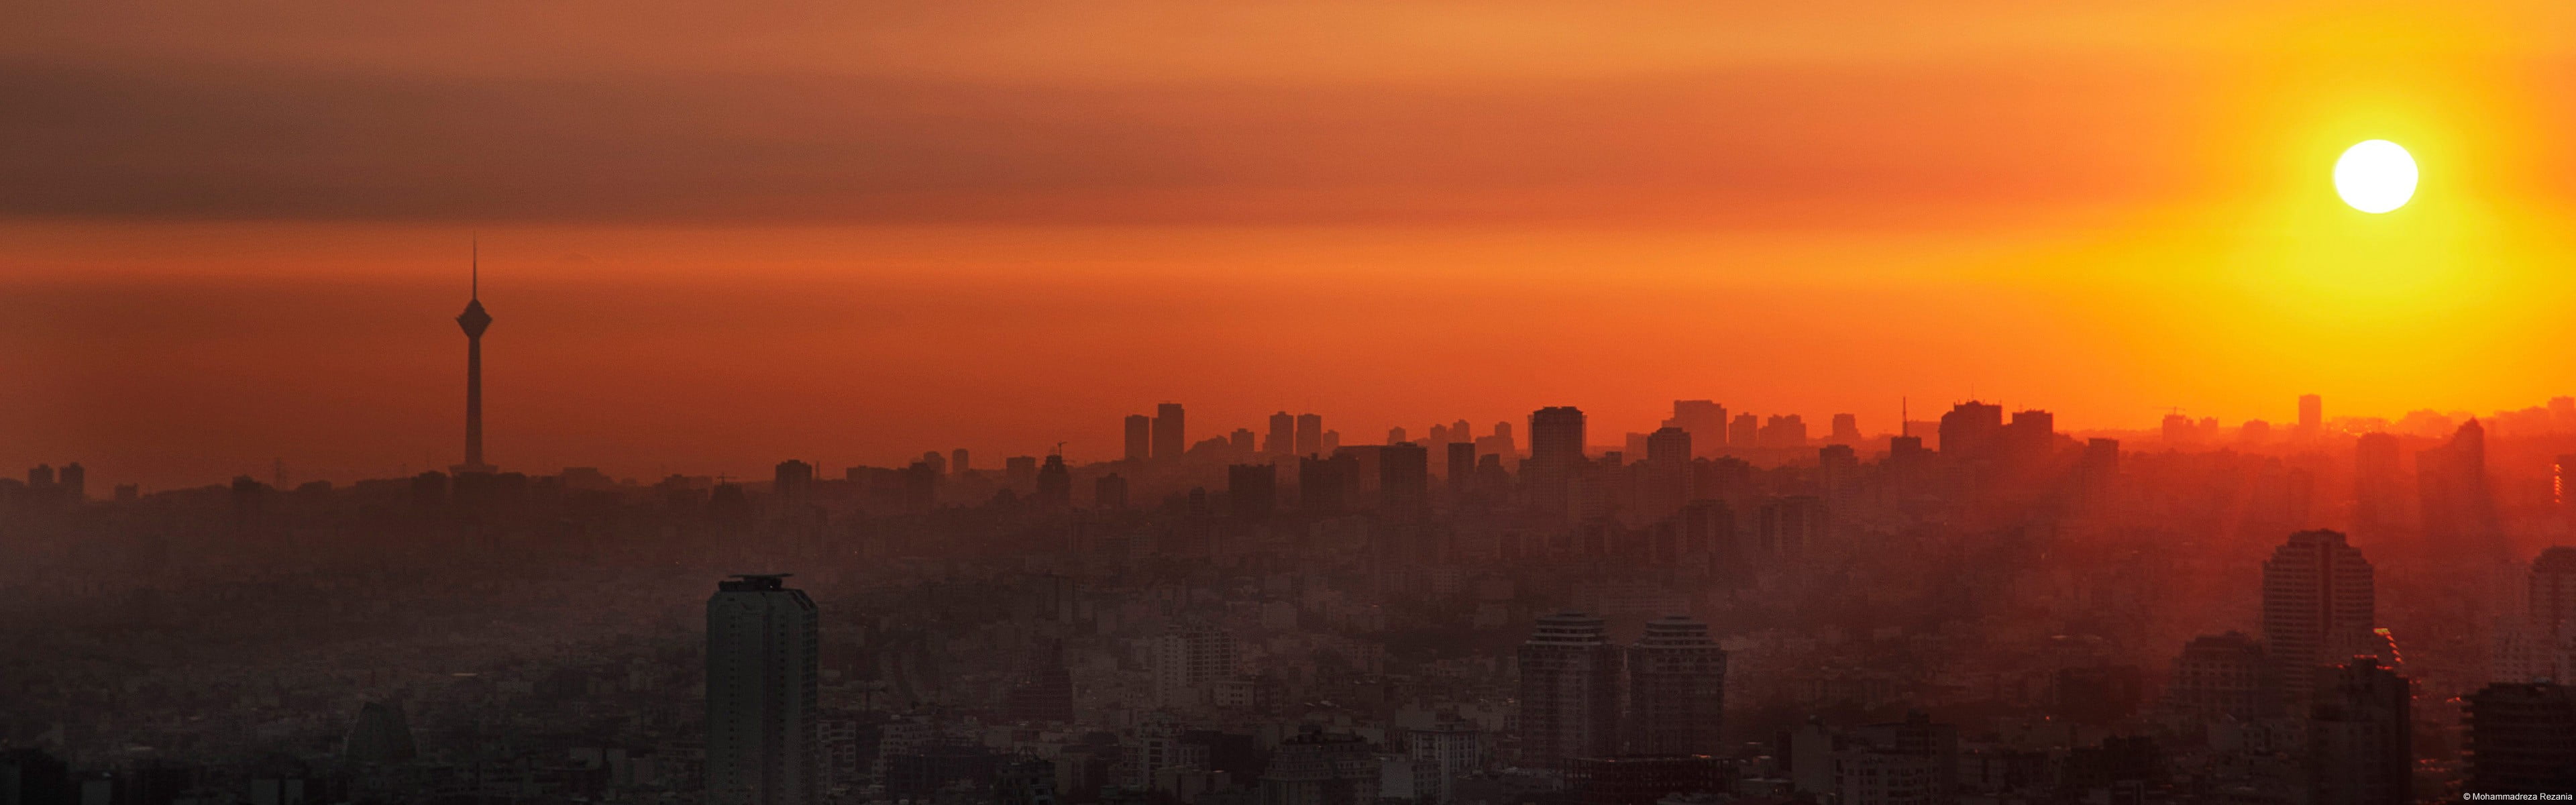 silhouette of city skyline, Iran, Tehran, city, Milad Tower